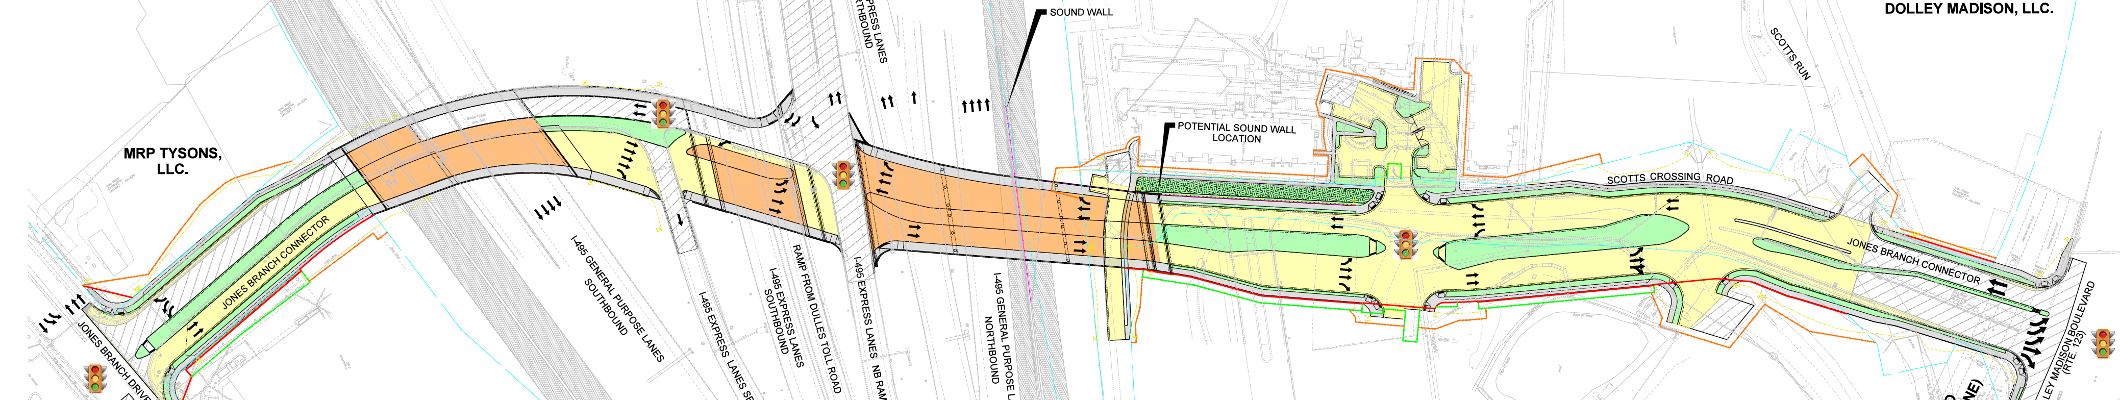 Layout plan of Jones Branch Connector proposal